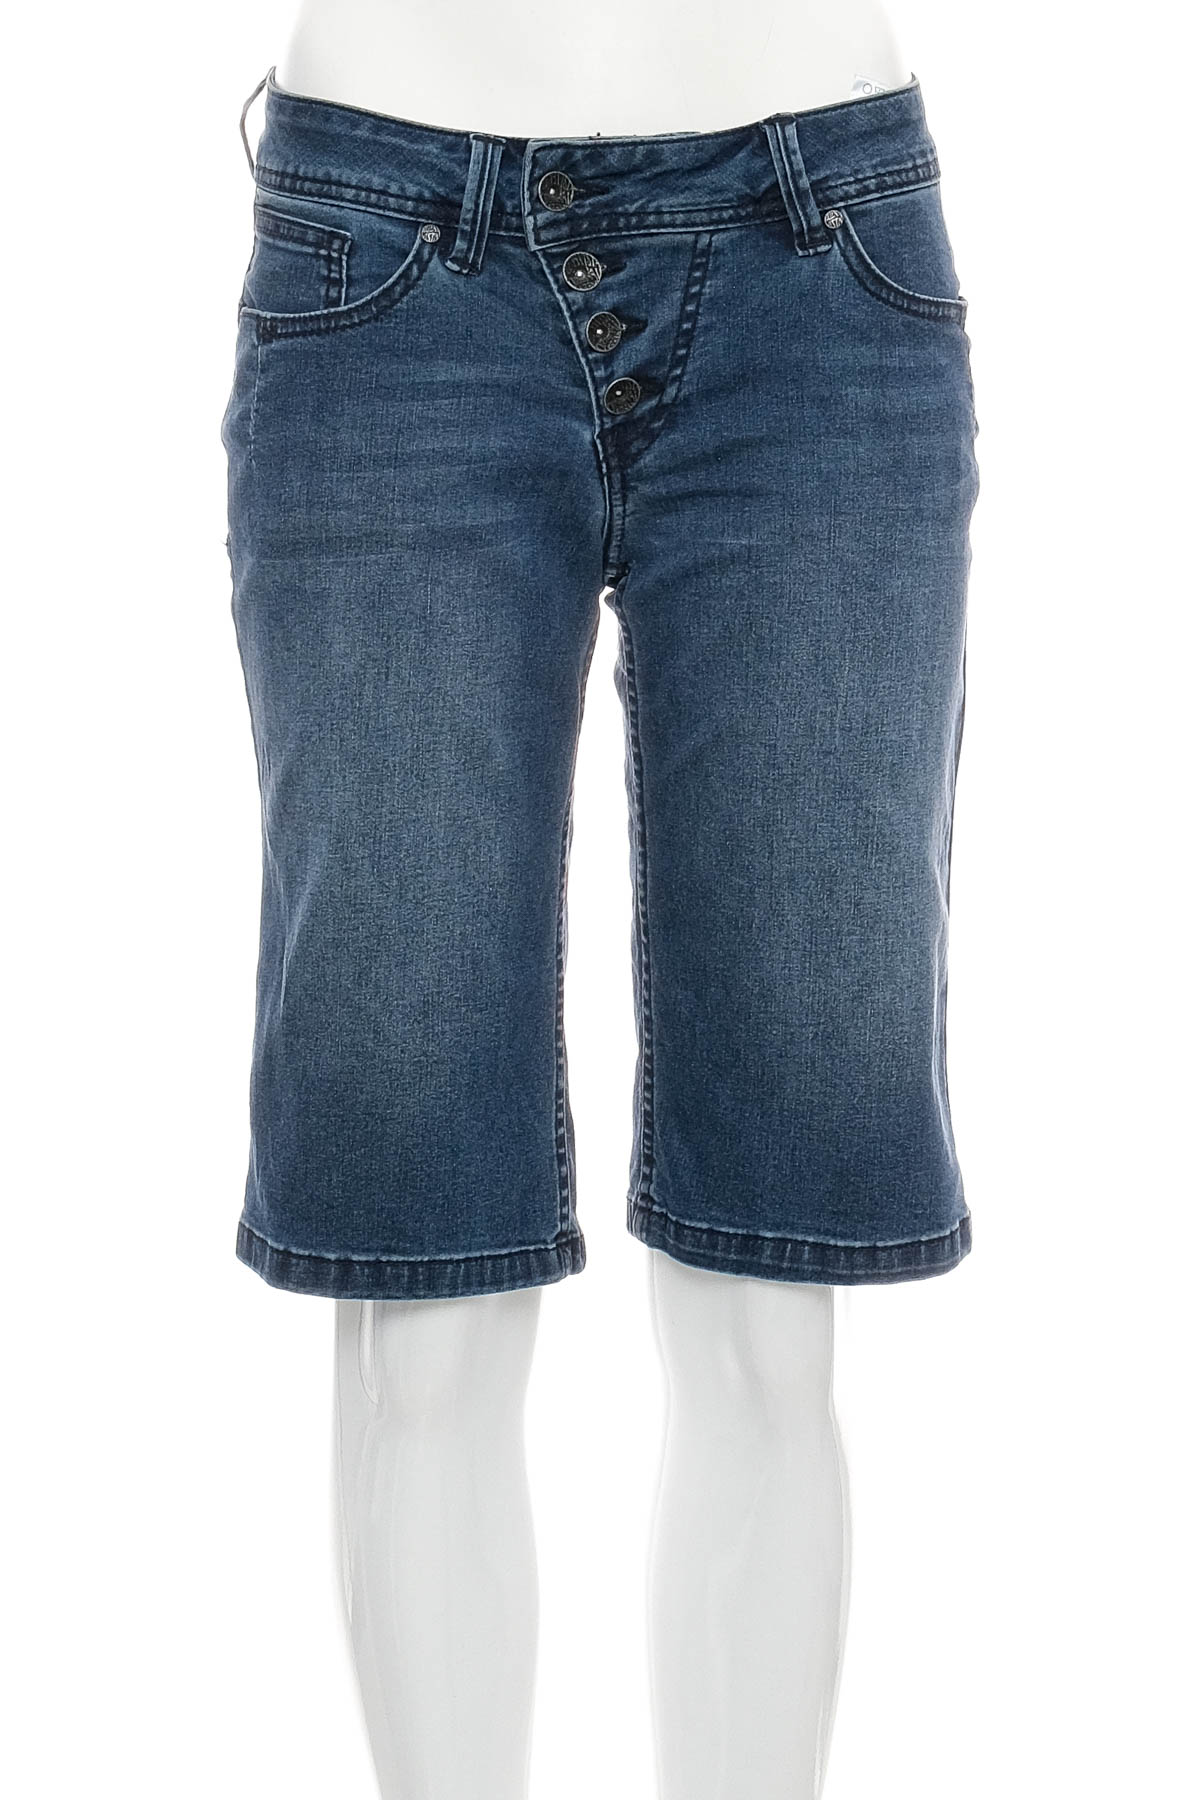 Female shorts - Buena Vista - 0